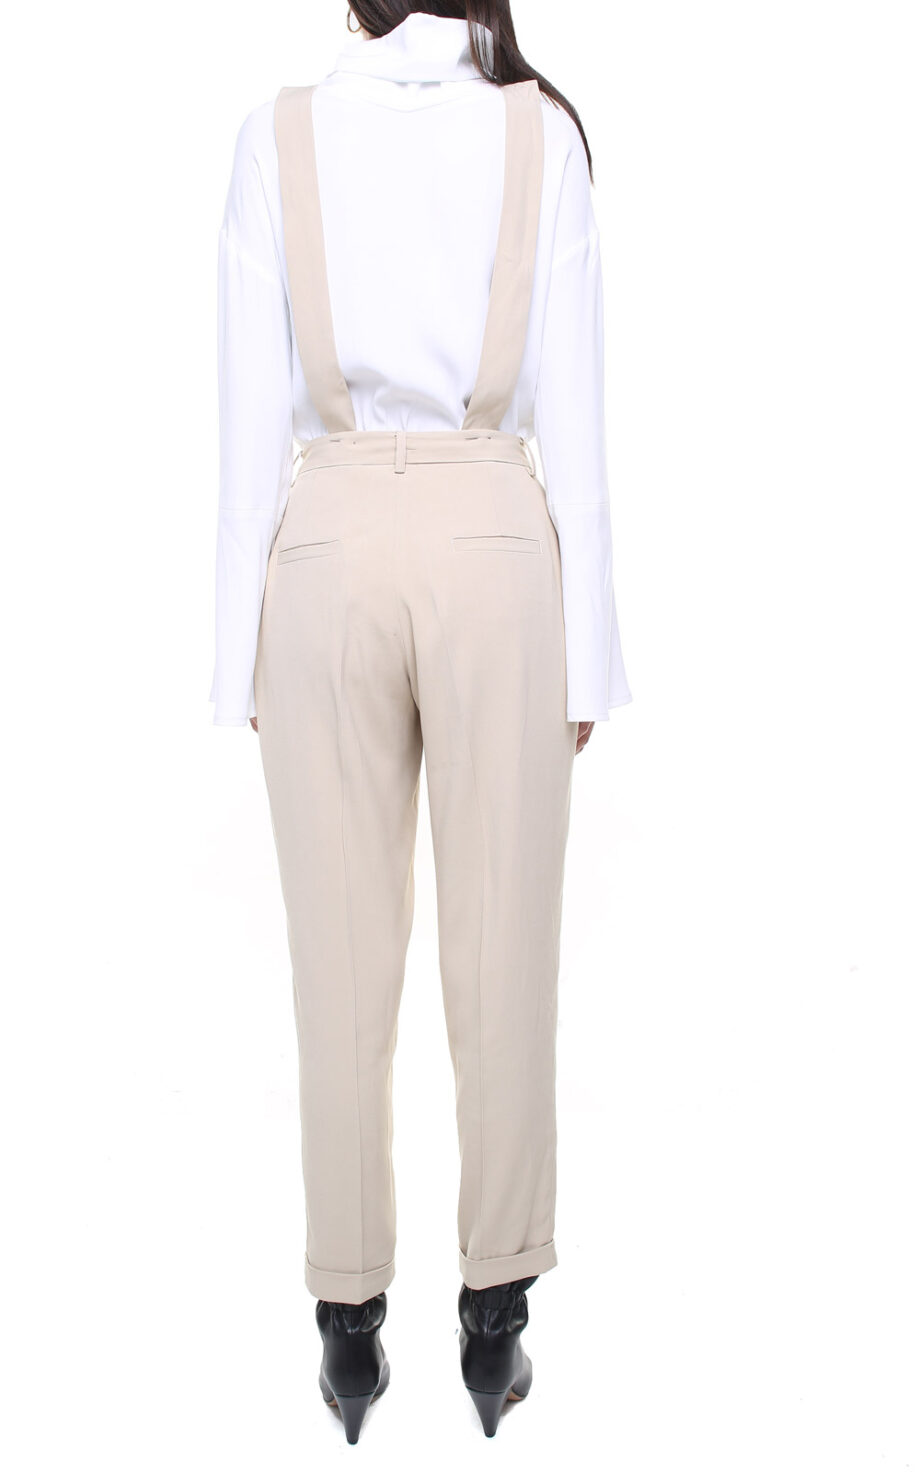 Jane trousers light beige w/ removable suspenders